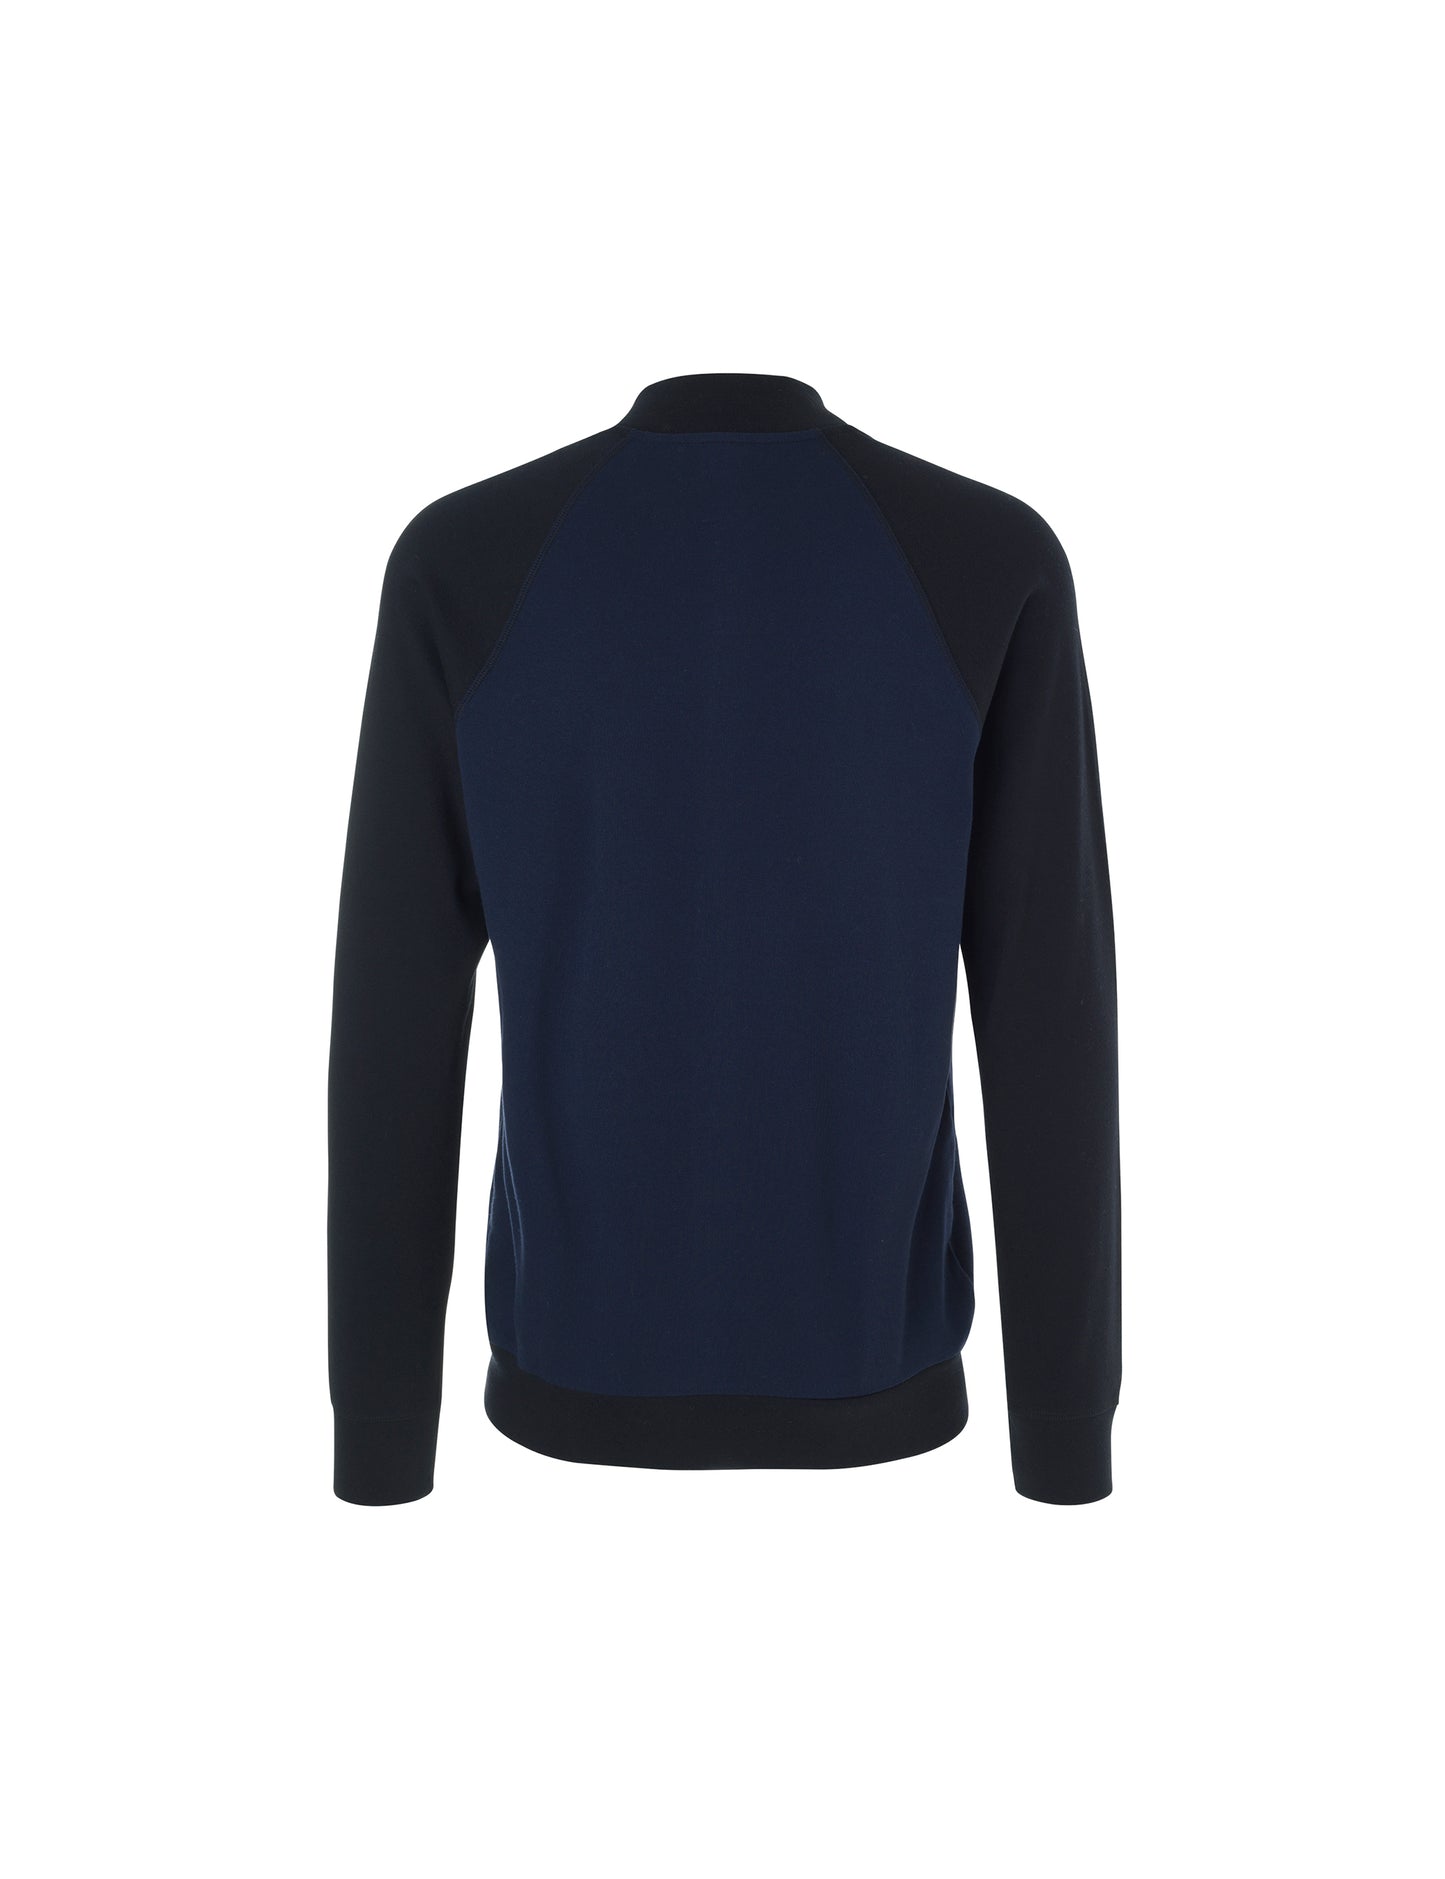 Cotton Rib Jacket Contrast, Black/Navy